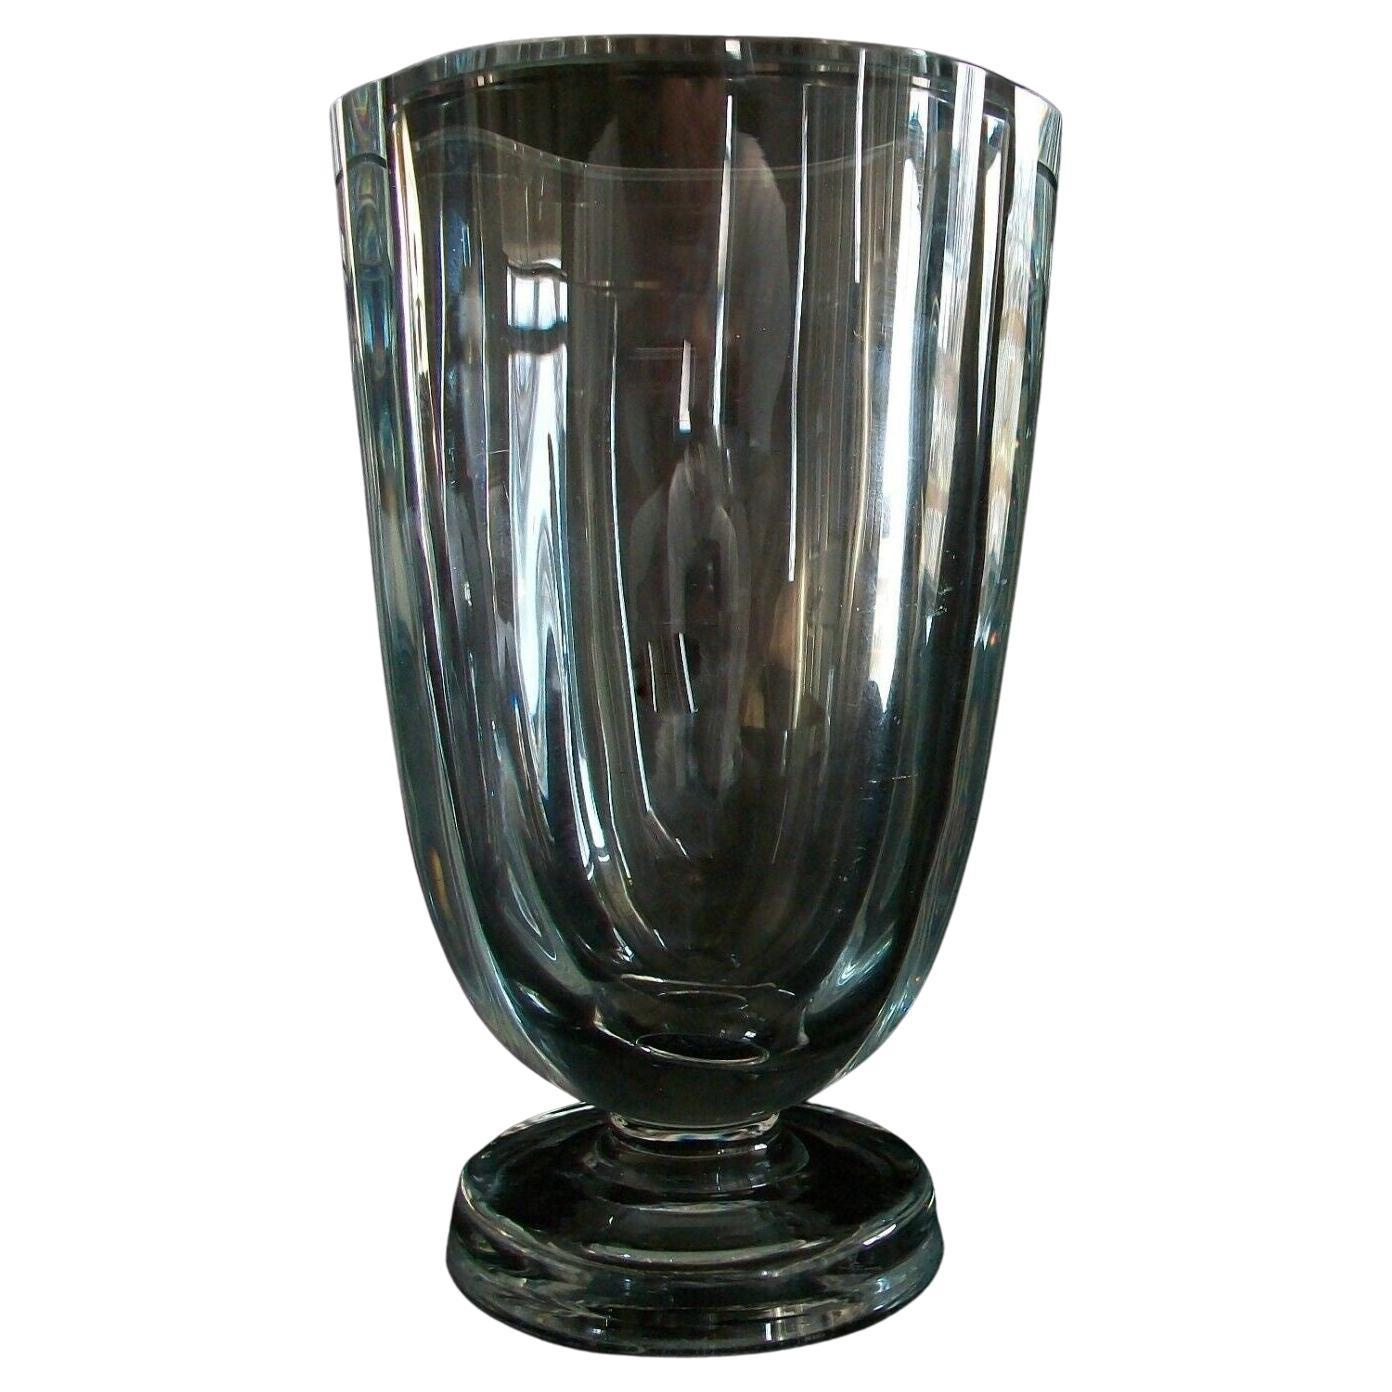 Strömberg Glass - Mid-Century Modern Crystal Vase, Signed, Sweden, circa 1950